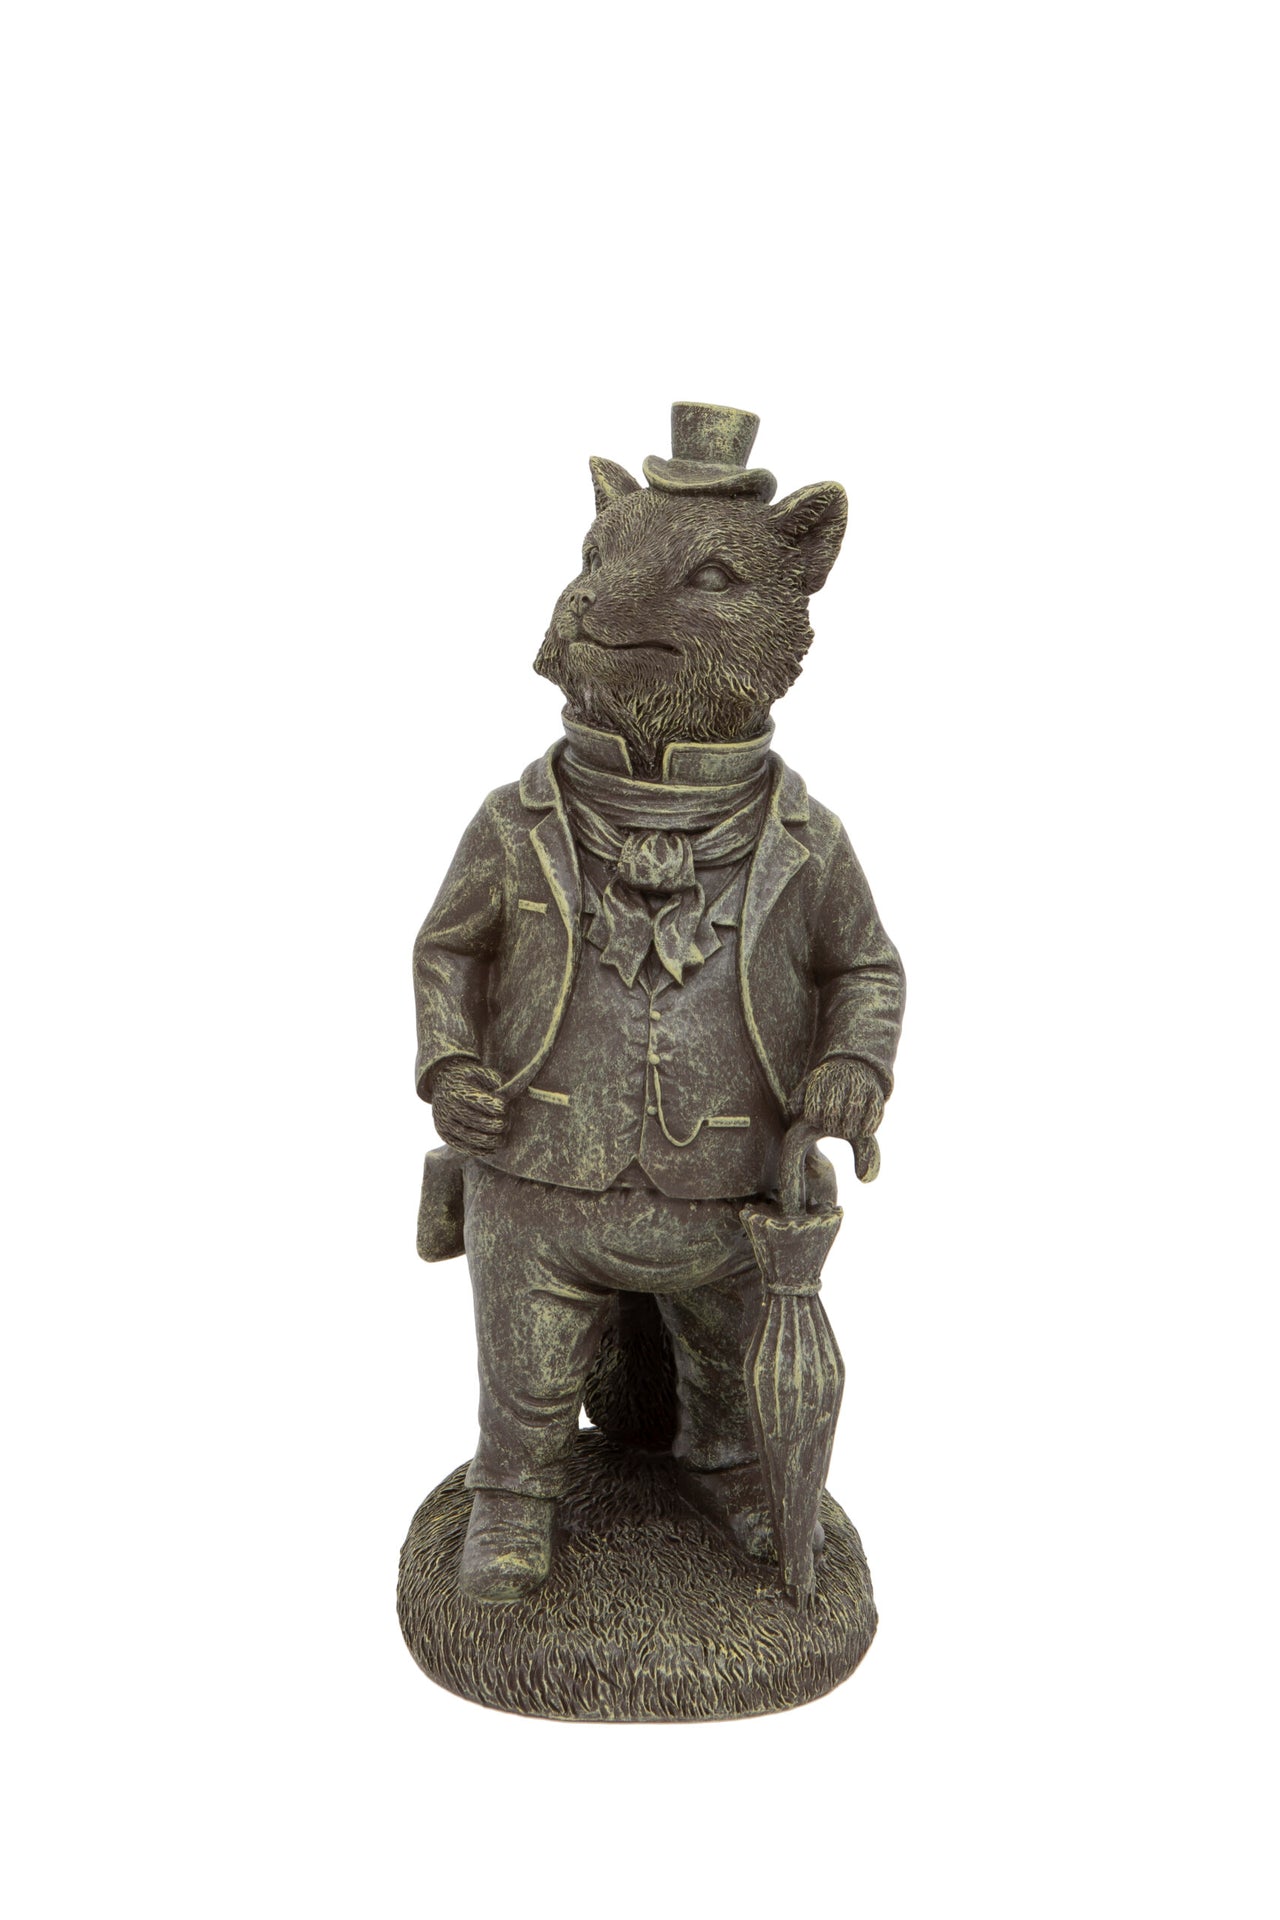 London Ornaments Mr. Fox Character Statue